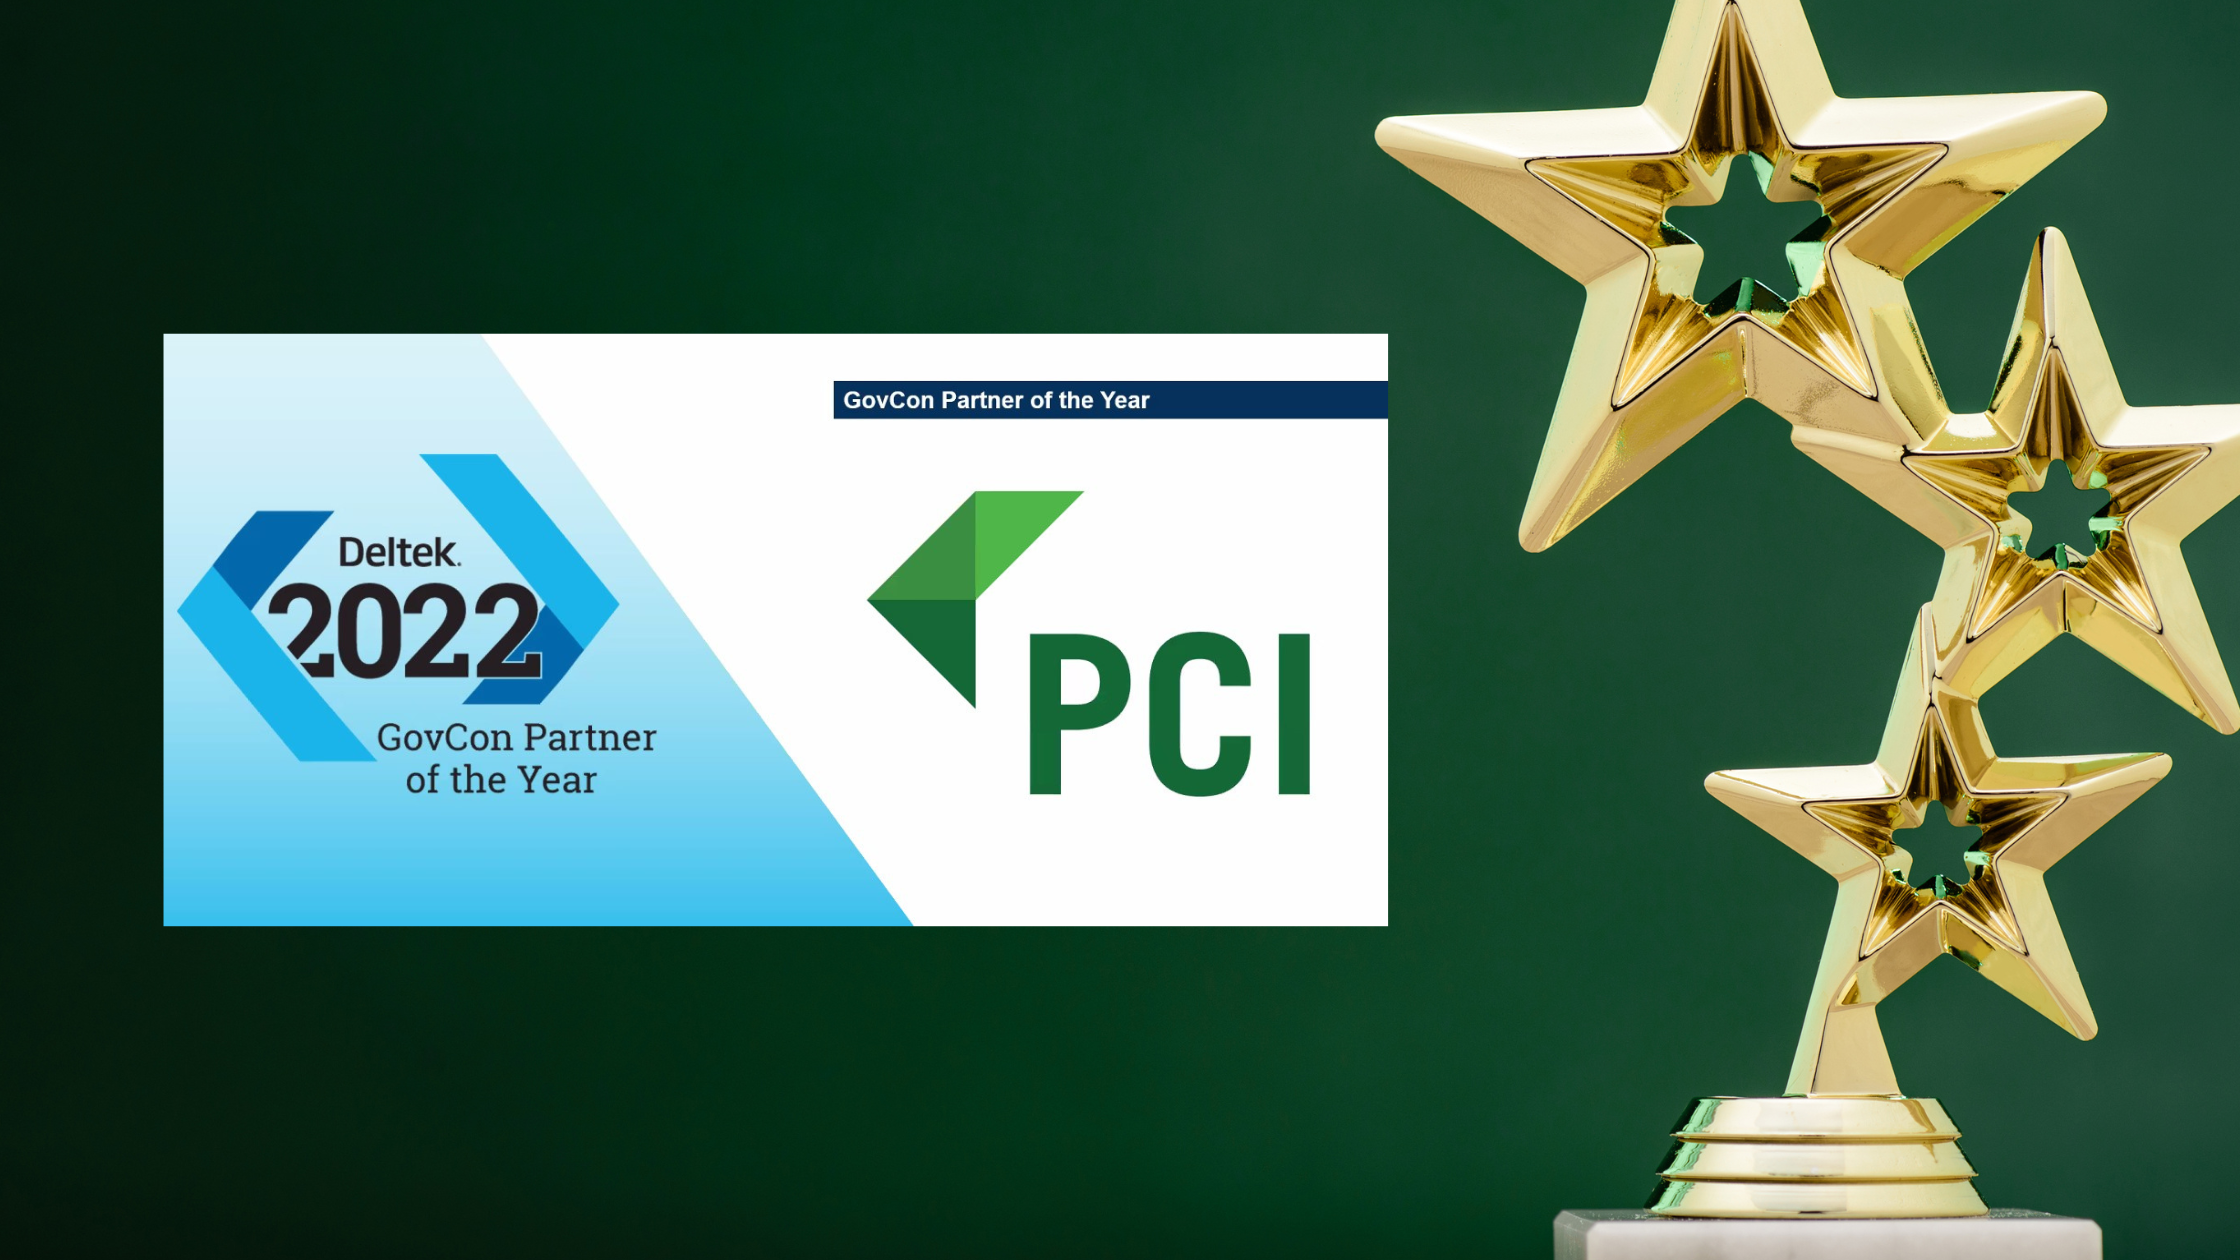 Premier Consulting & Integration (PCI) Receives 2022 GovCon Partner of the Year Award at Deltek Partner Kickoff